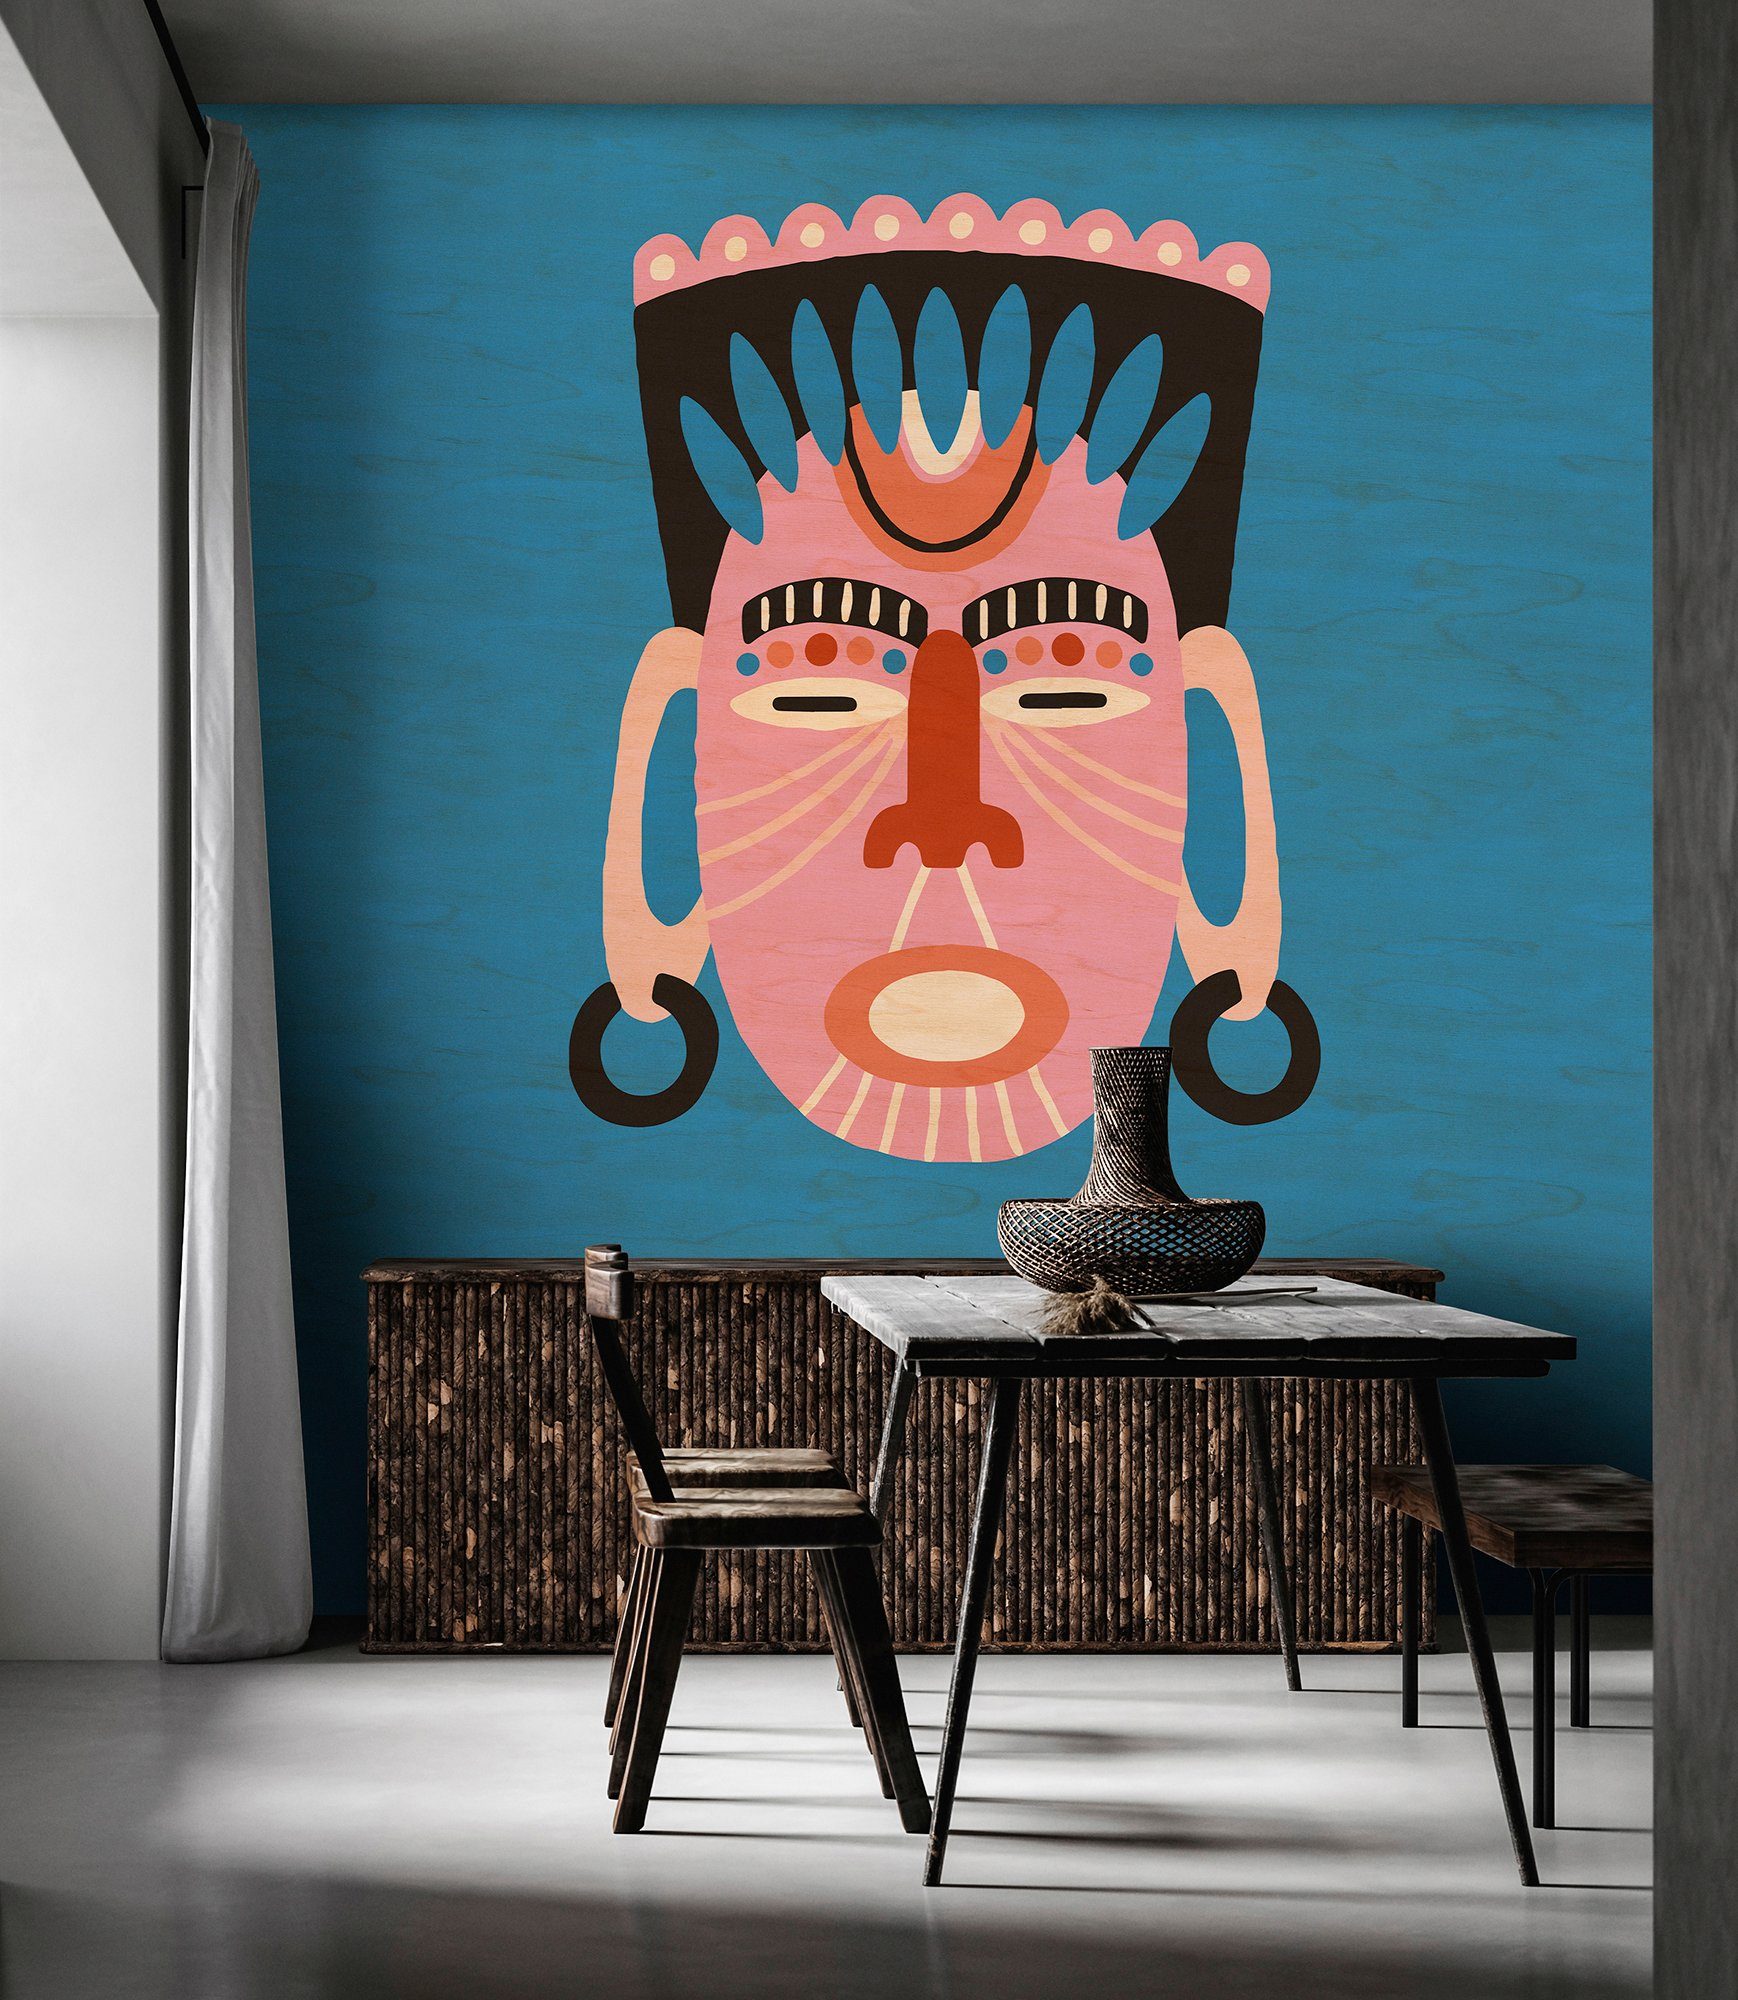 living walls Fototapete Walls by Overseas, blau-rosa Patel Vlies, glatt, Wand